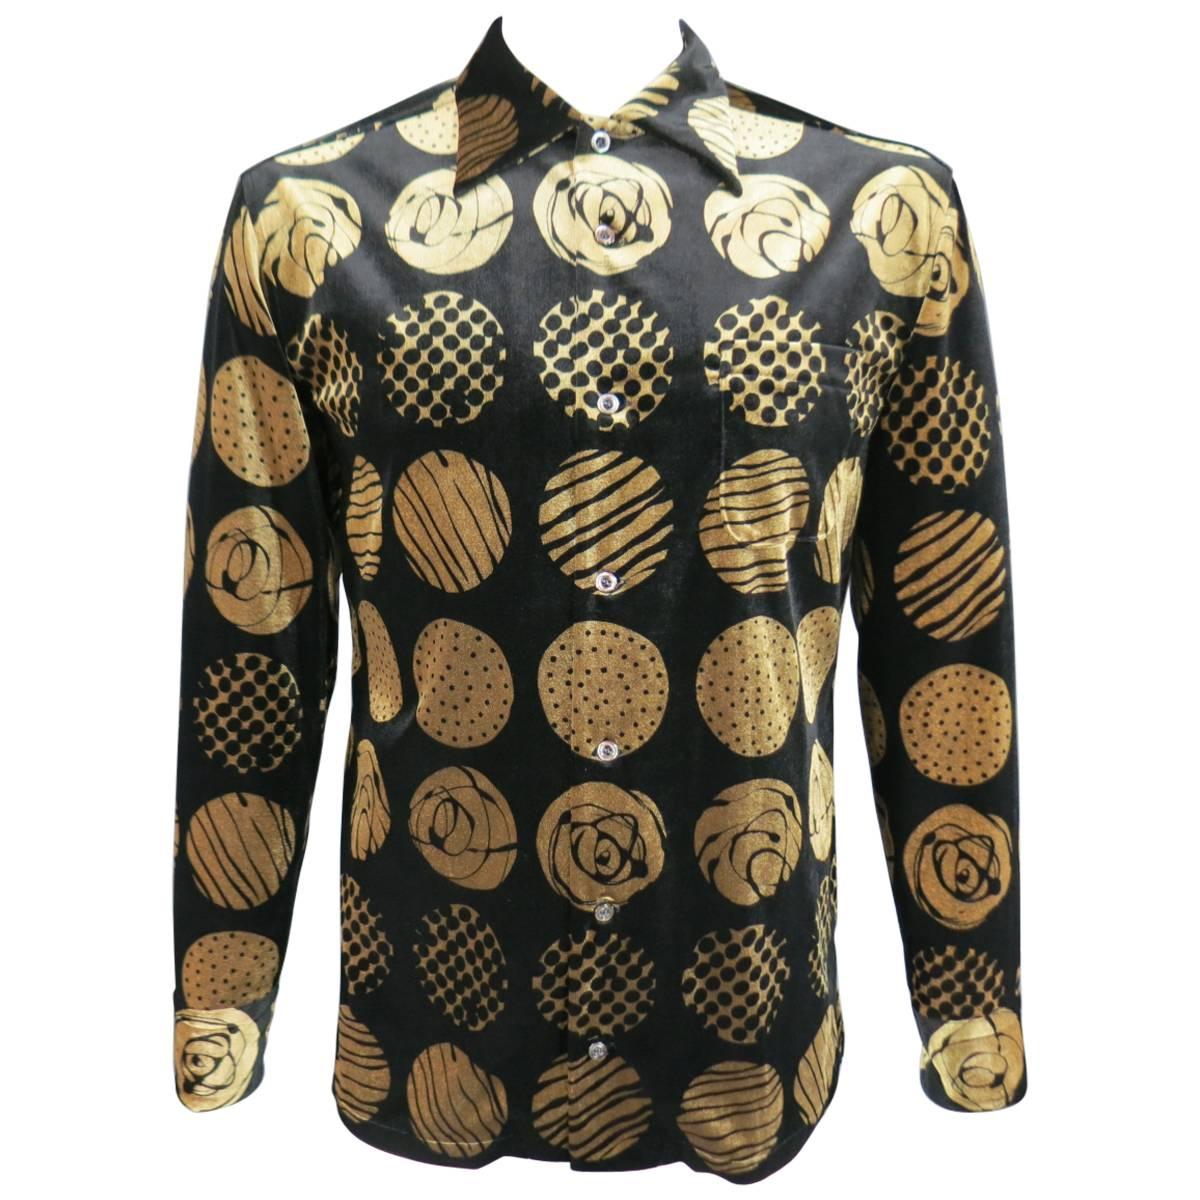 Vintage MATSUDA Size L Black & Gold Printed Polka Dot Velvet Long Sleeve Shirt